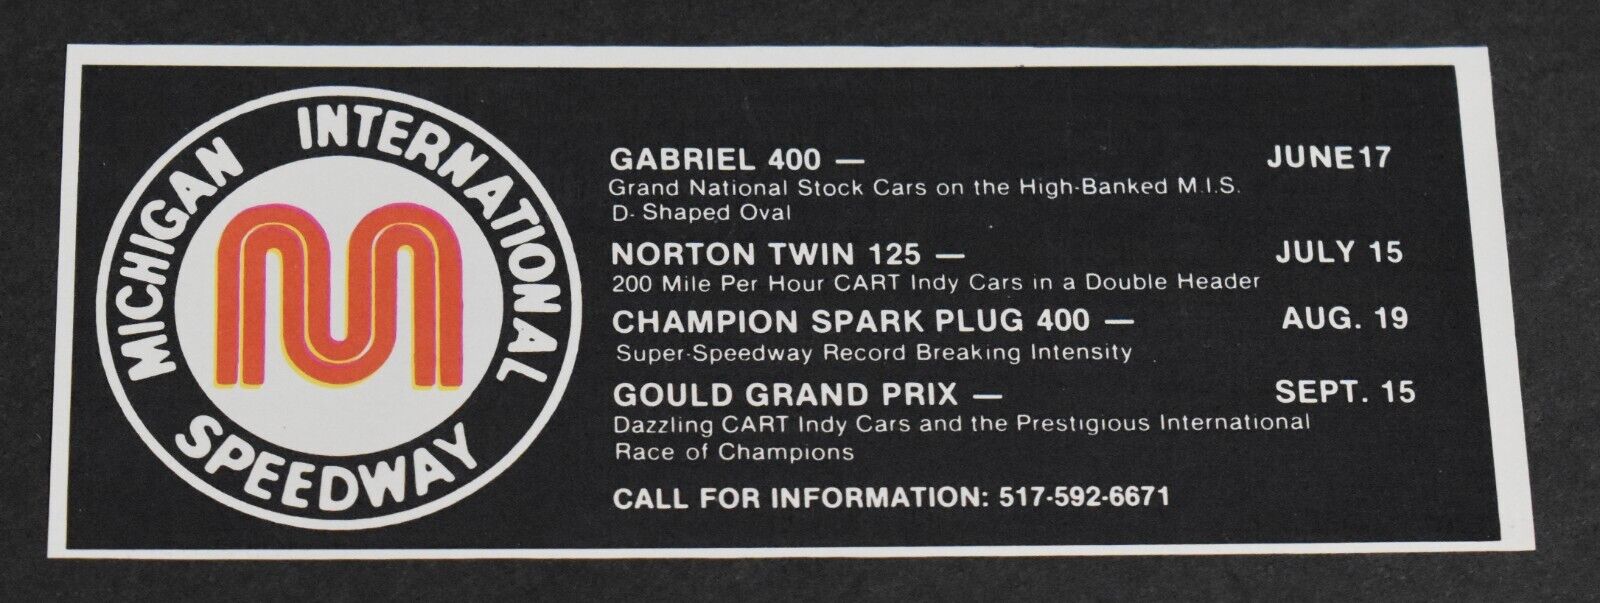 1979 Print Ad Michigan International Speedway Stock Cars Indy Gabriel 400 Art